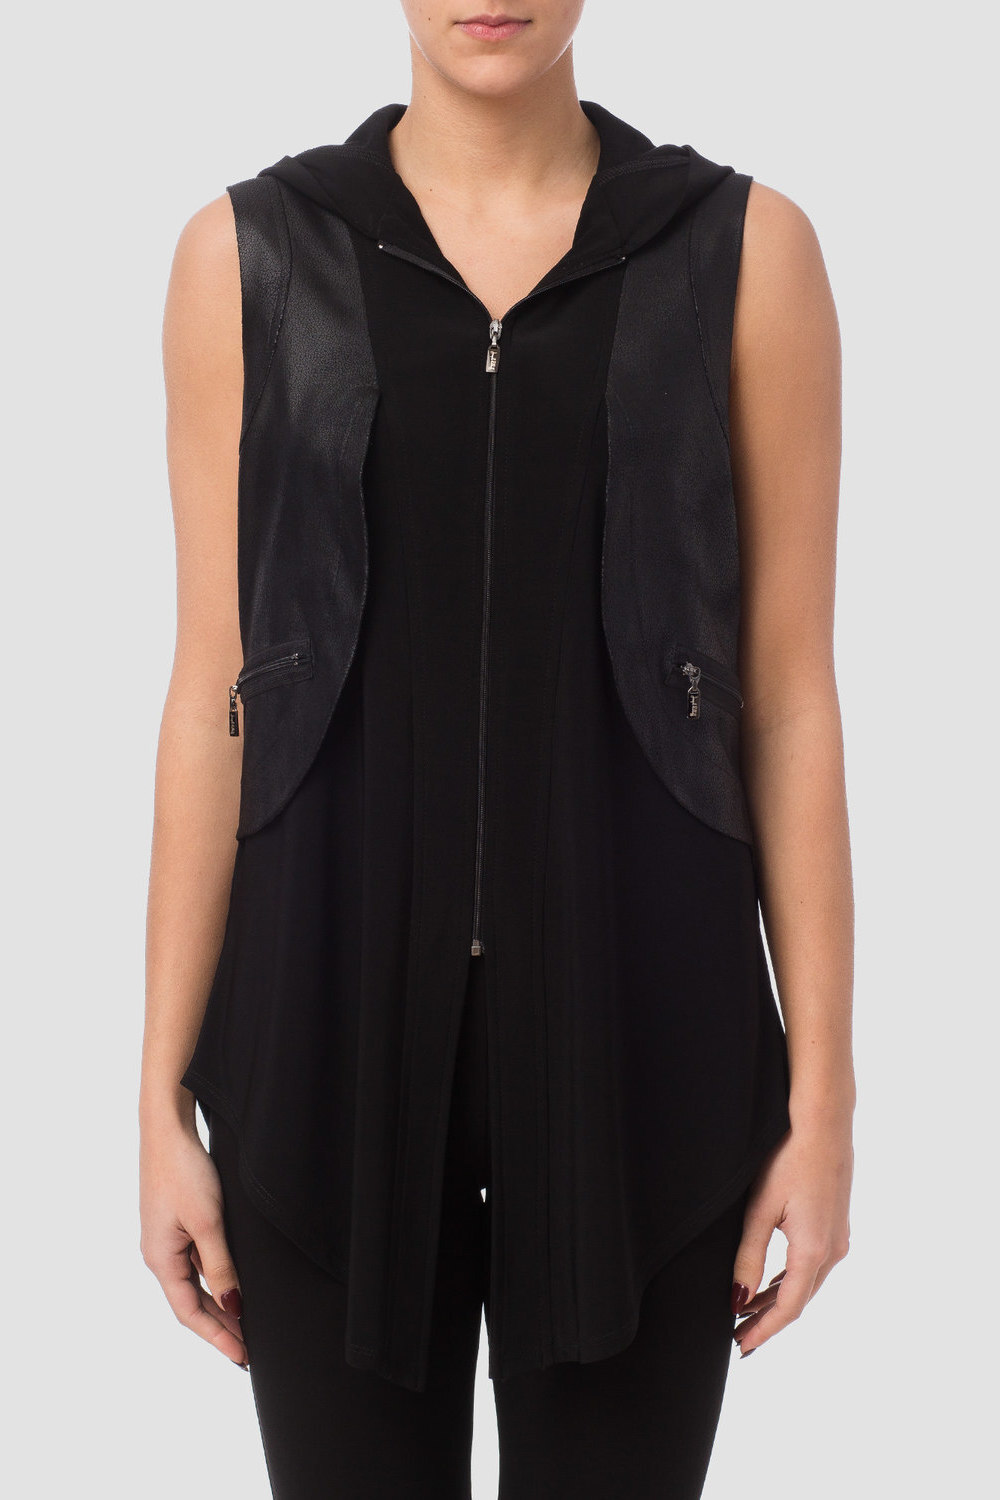 Joseph Ribkoff vest style 171375. Black/black